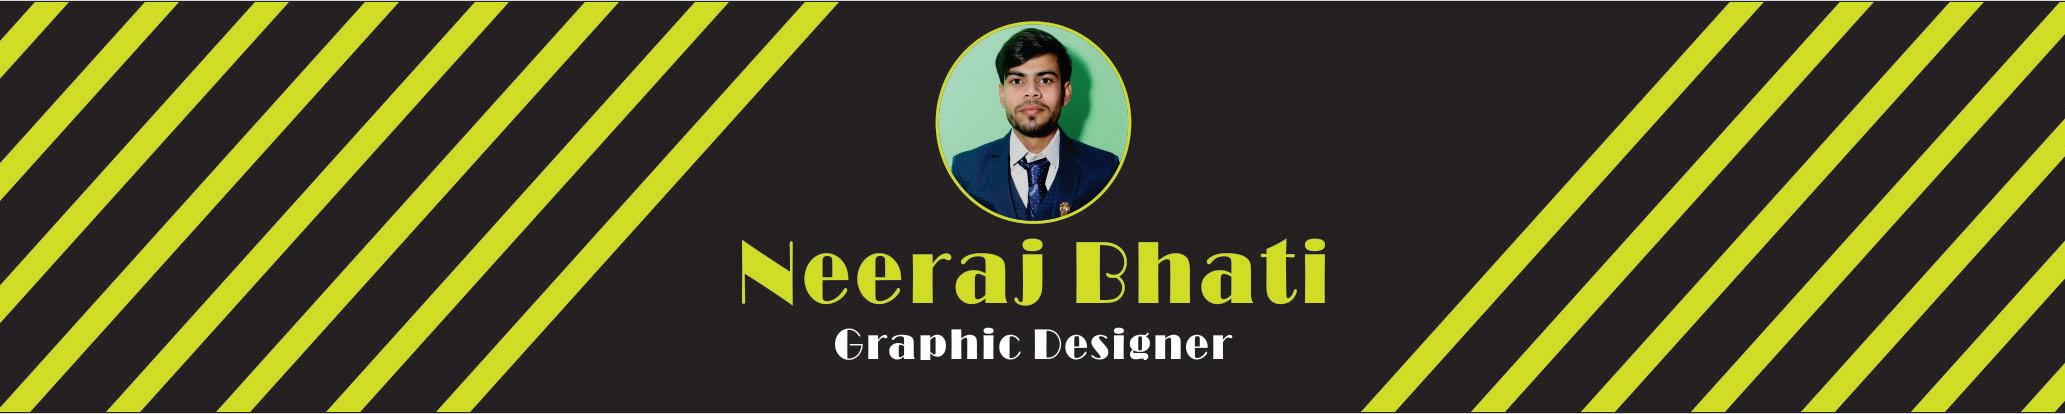 Neeraj Bhati's profile banner